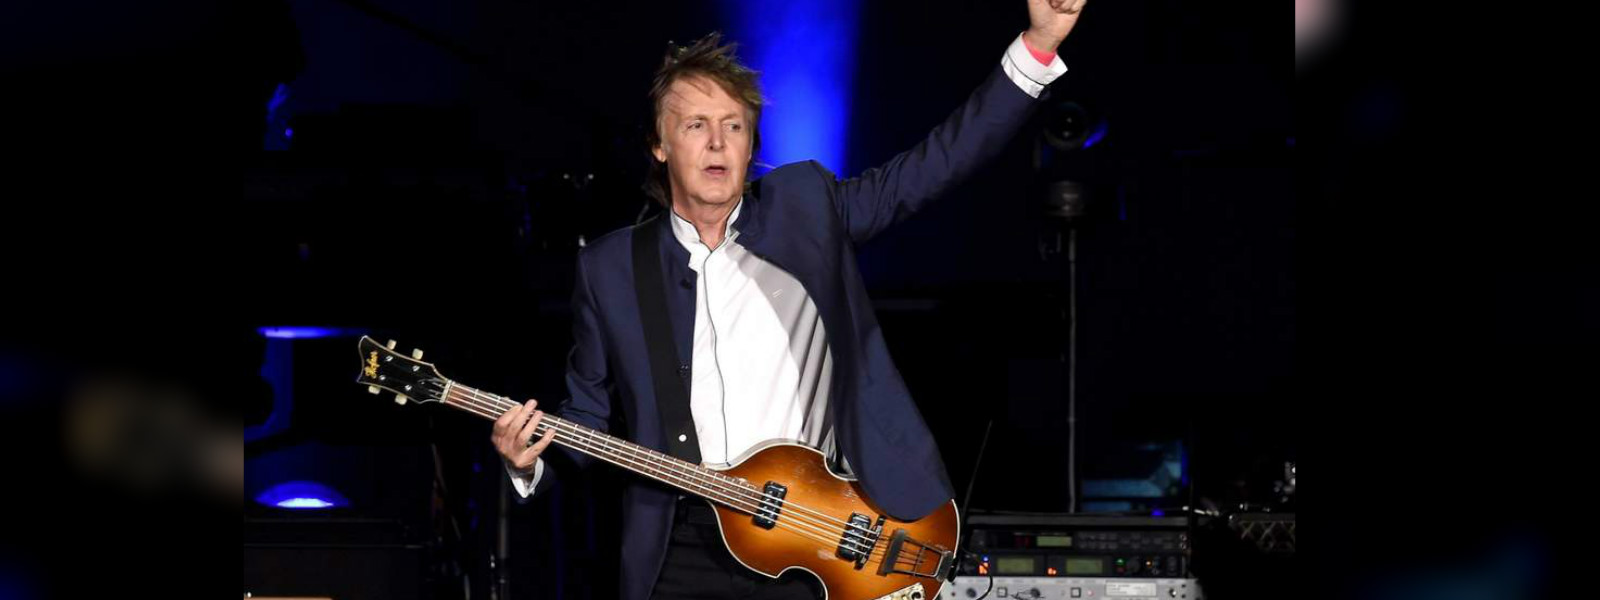 Paul McCartney rocks out on stage in London